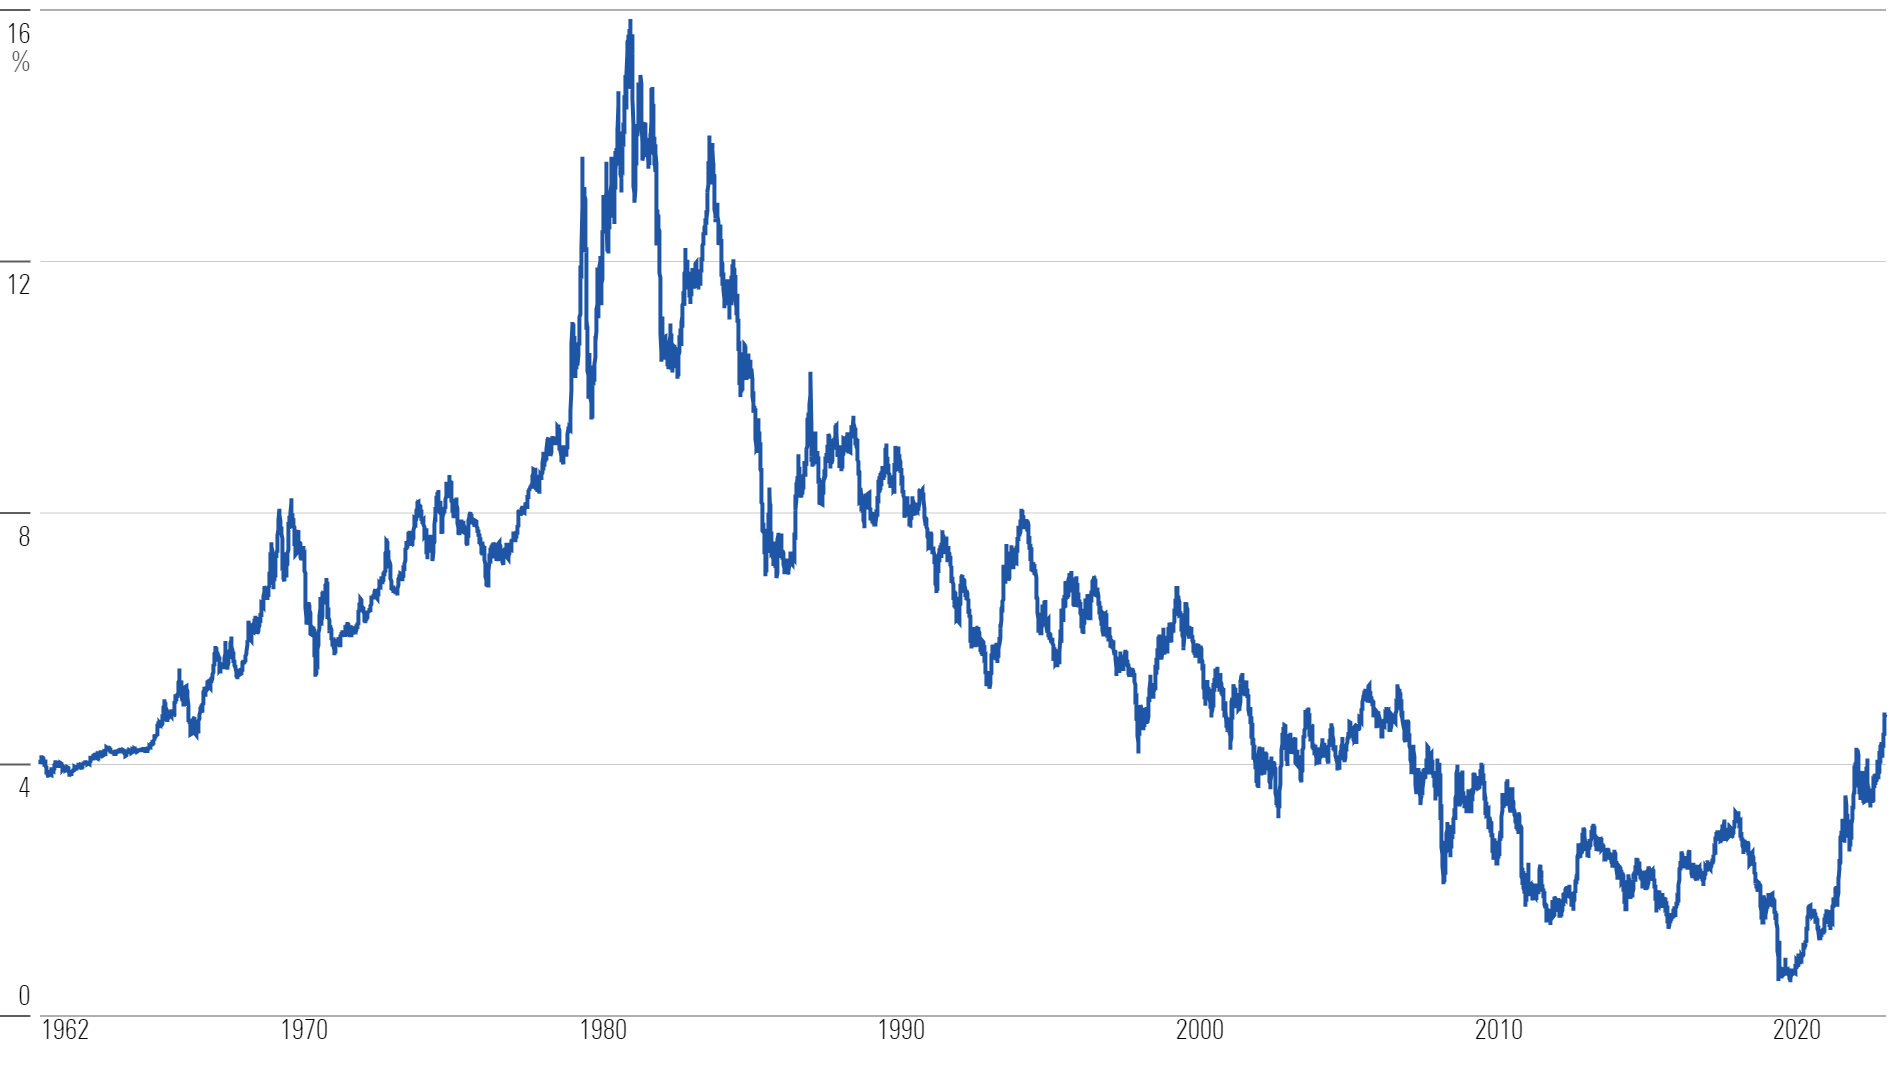 Line chart showing 10-year treasury yields since 1962.